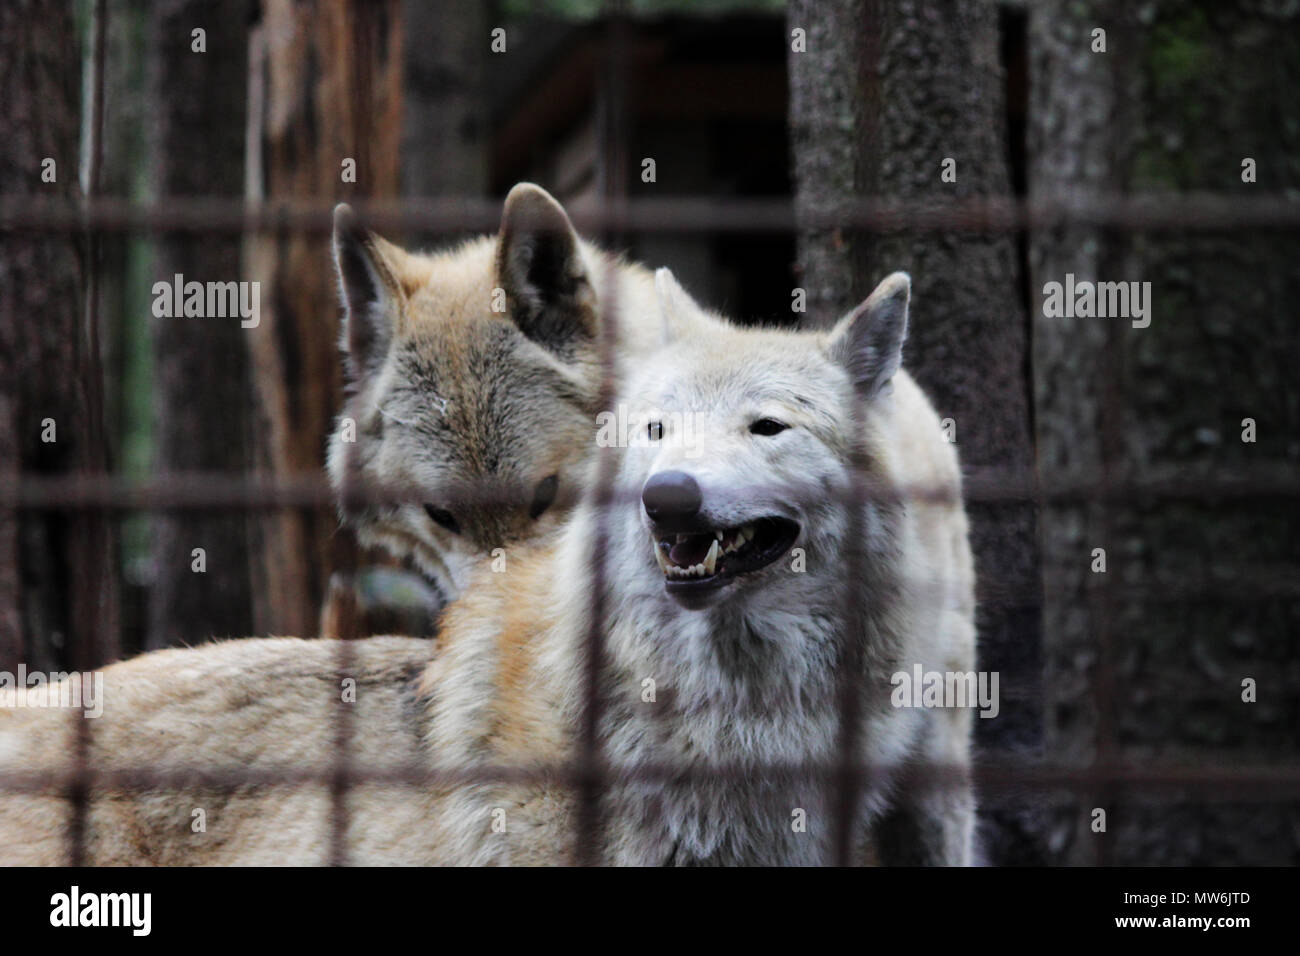 Wolves behind bars